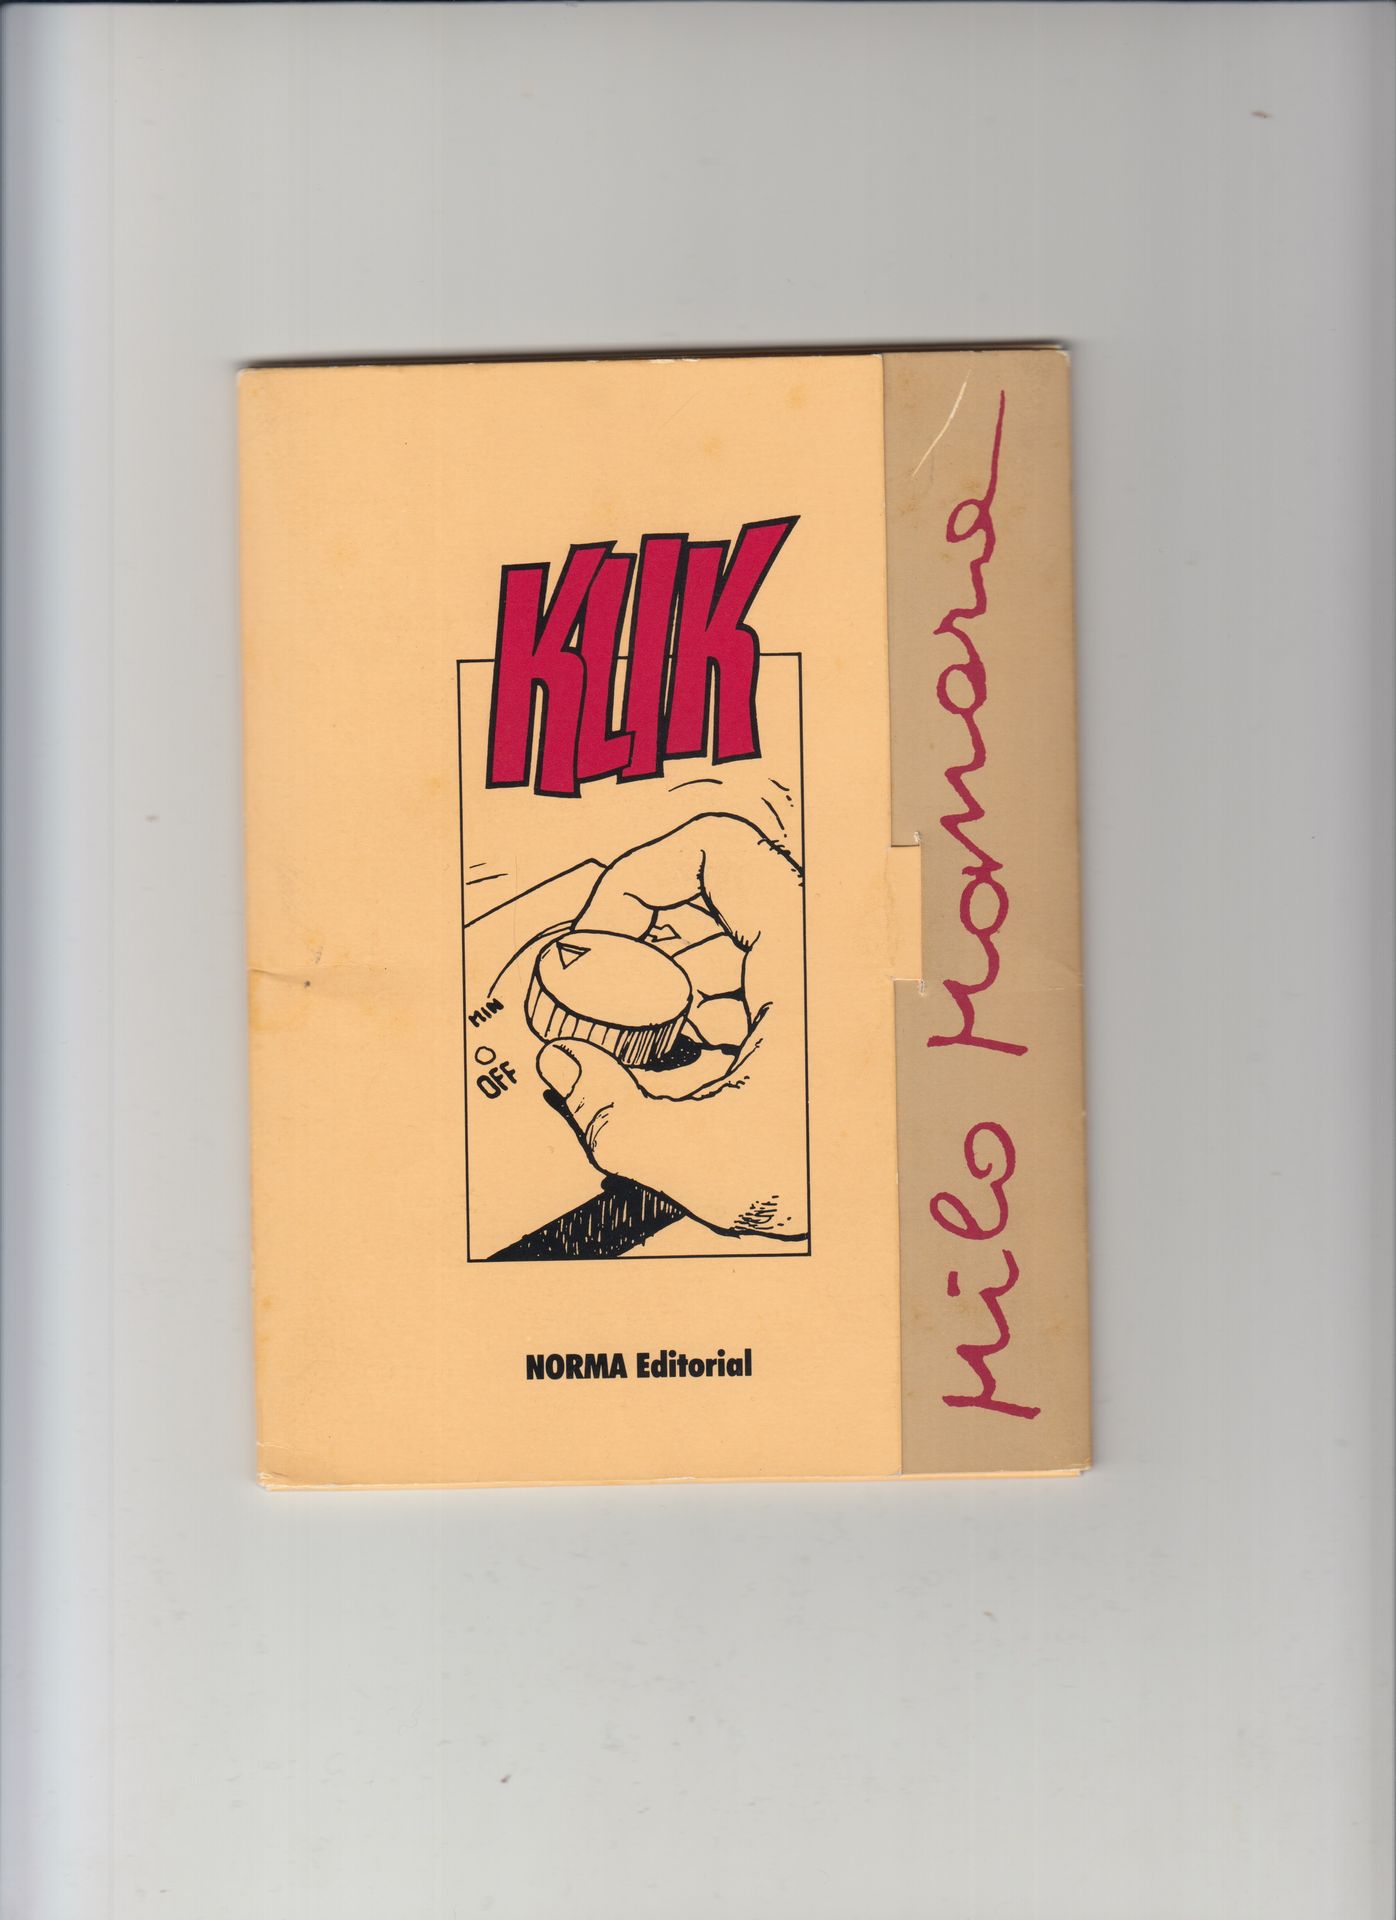 MANARA Klik portfolio.

齐全的8张情色卡片。

尺寸：17 x 13厘米。1992年由诺玛编辑部出版的极为罕见的副本。状况非常好。